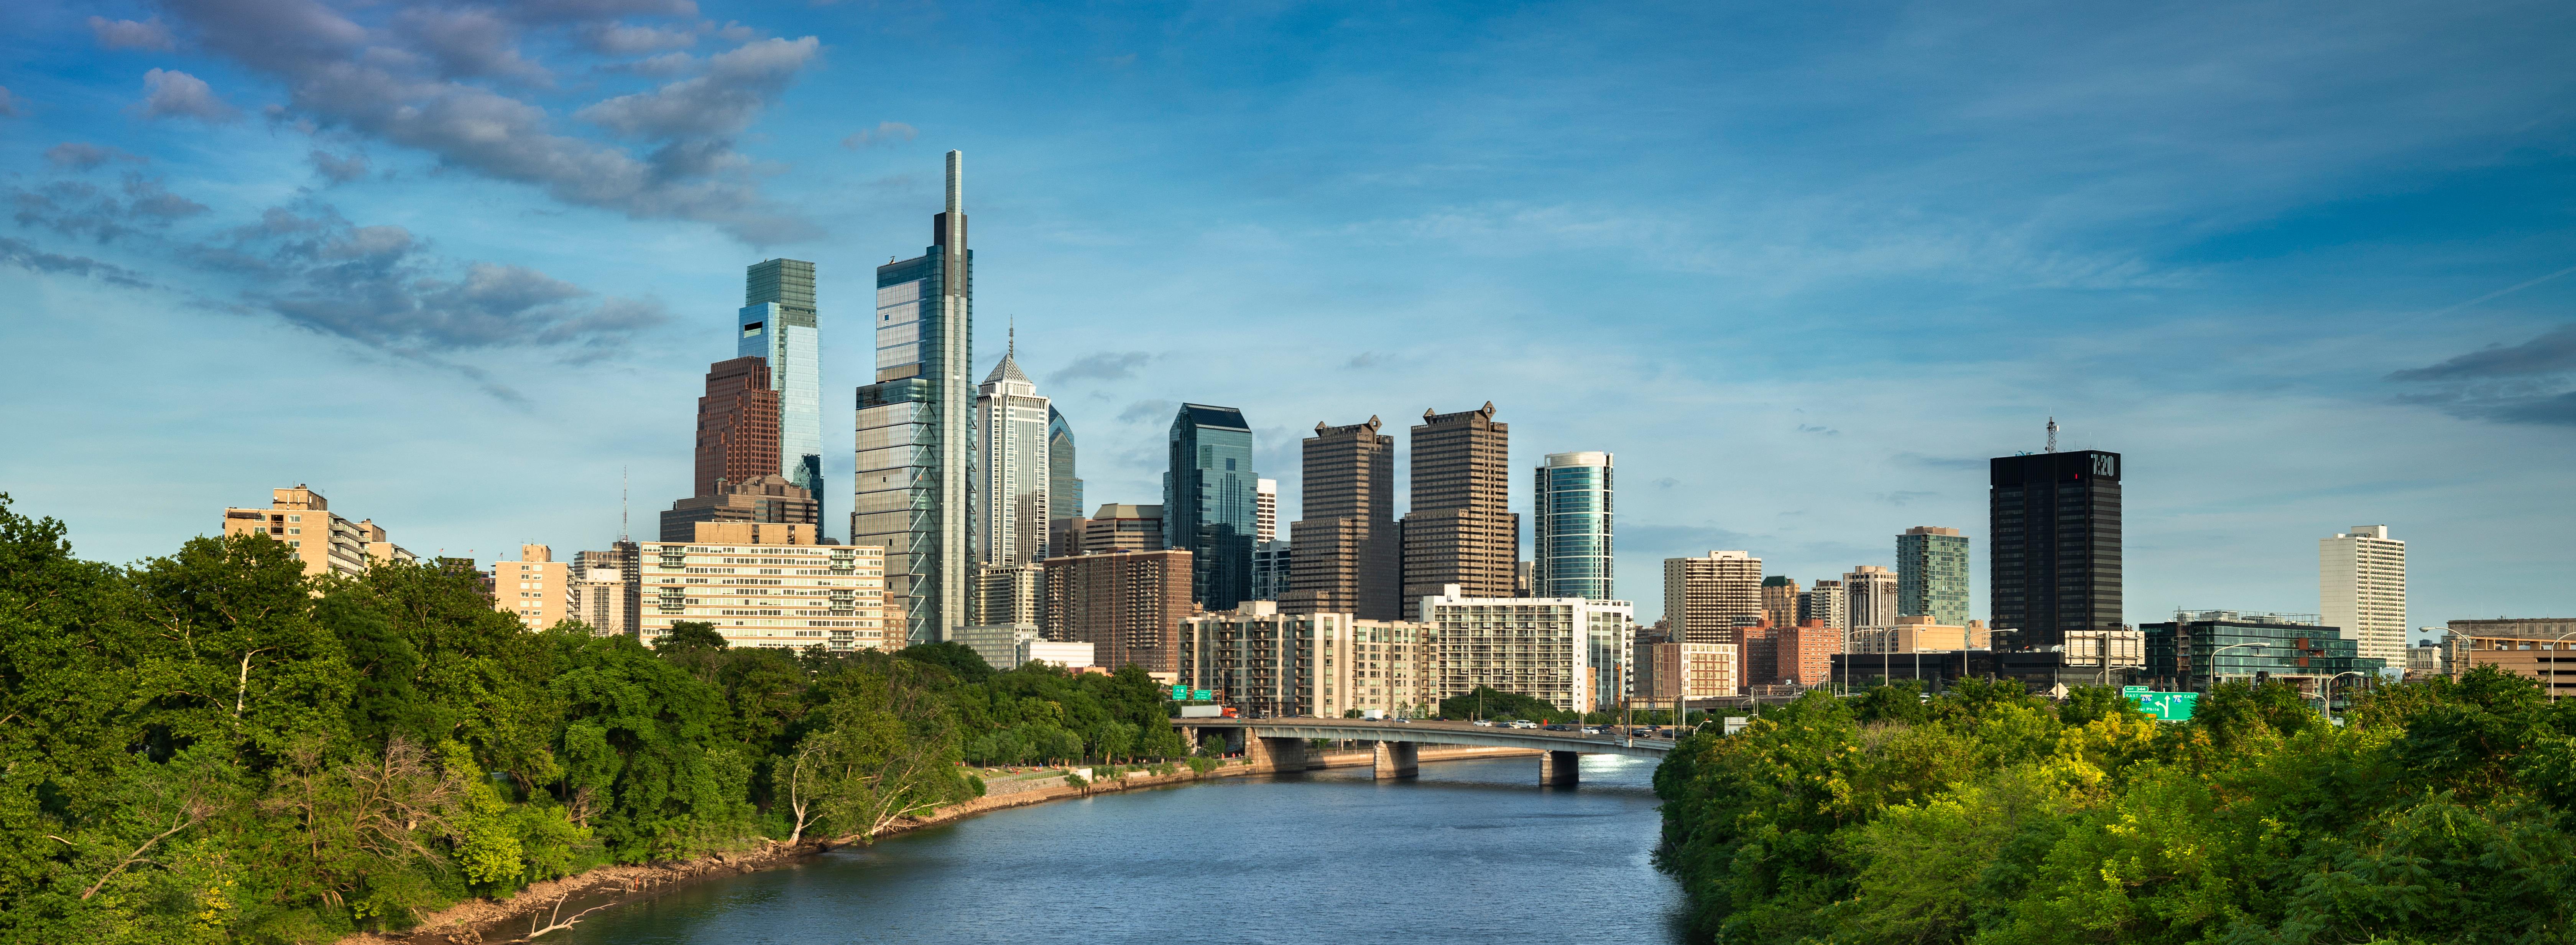 Philadelphia panorama cityscape downtown urban core skyscrapers over the Schuylkill River in Pennsylvania USA